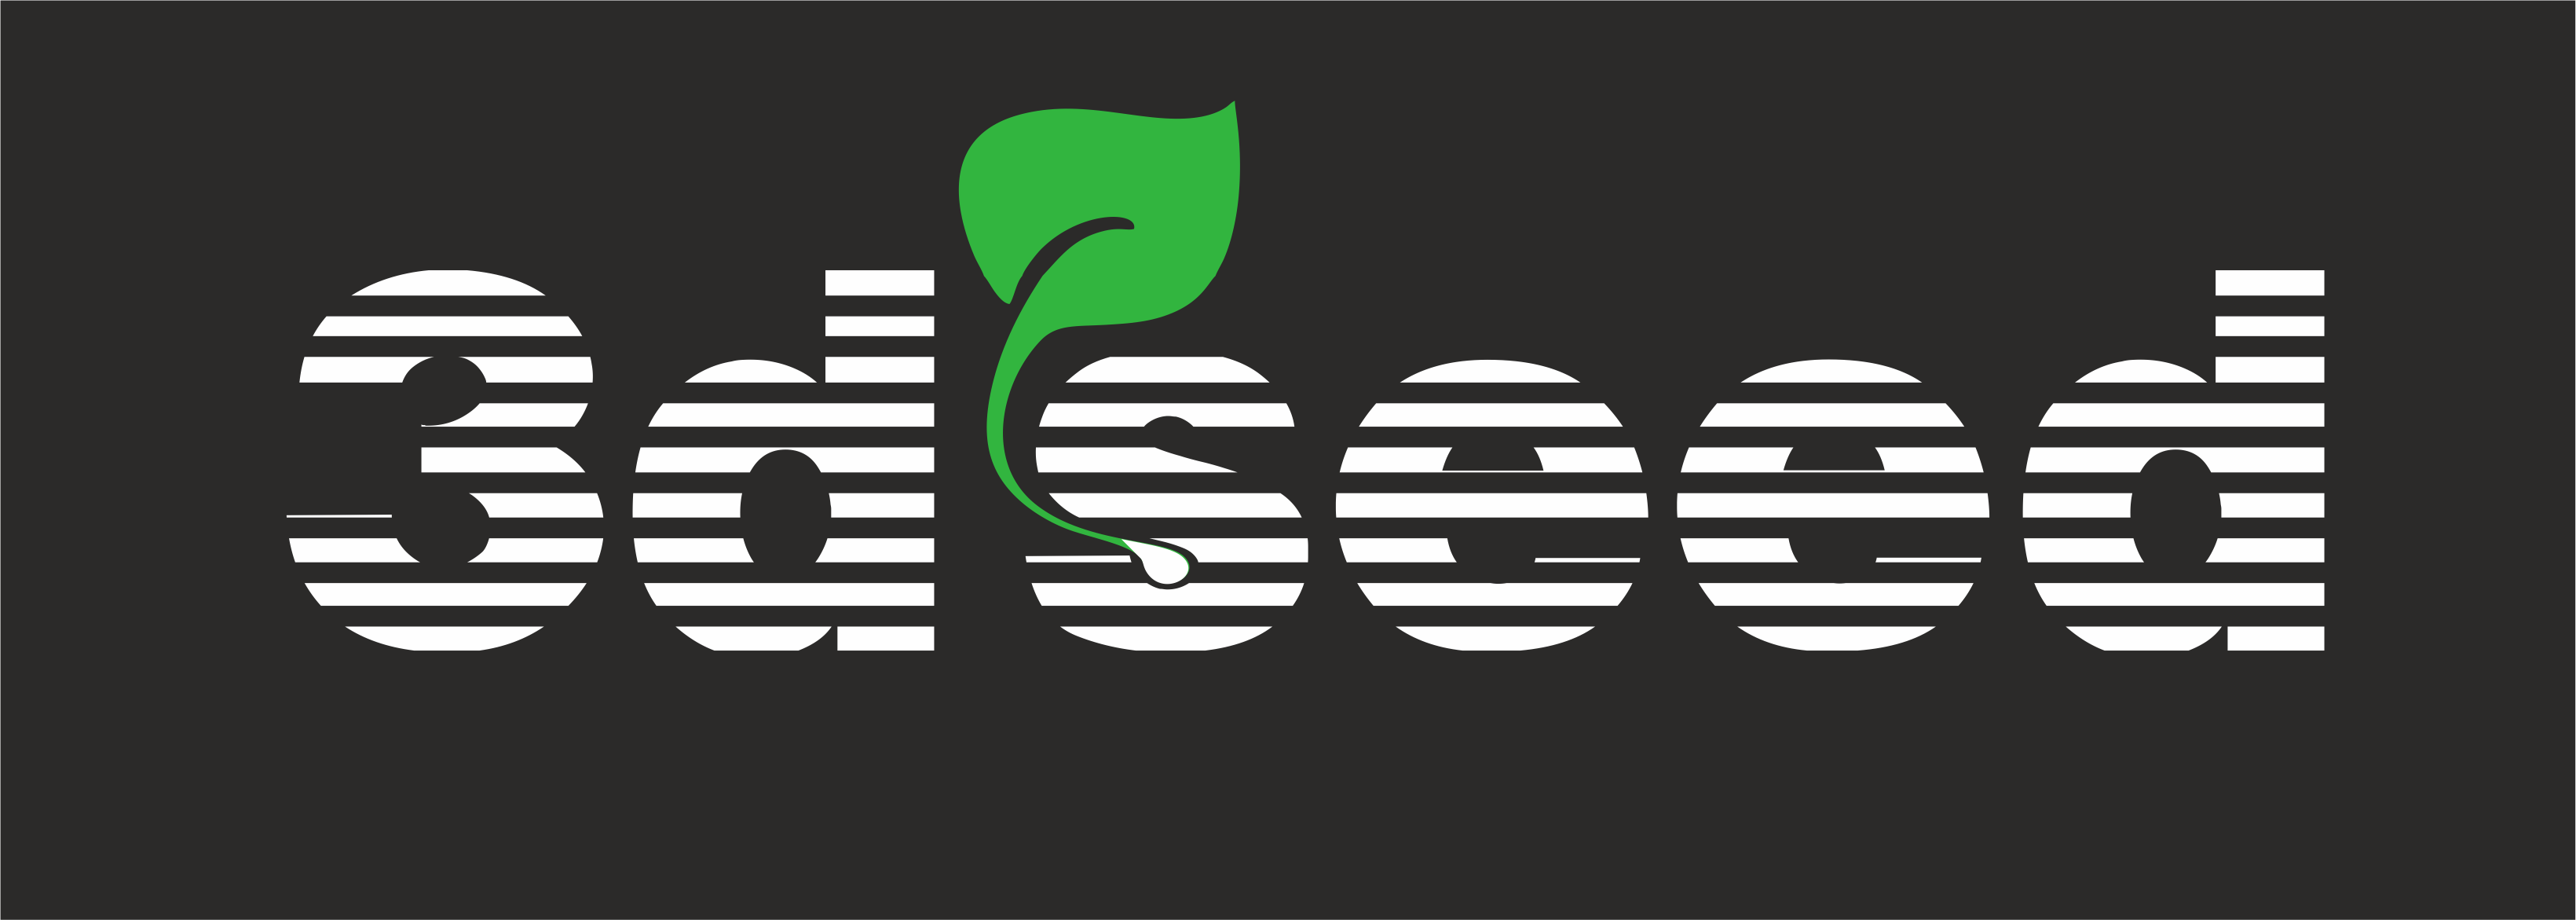 3d-seed-black-logo